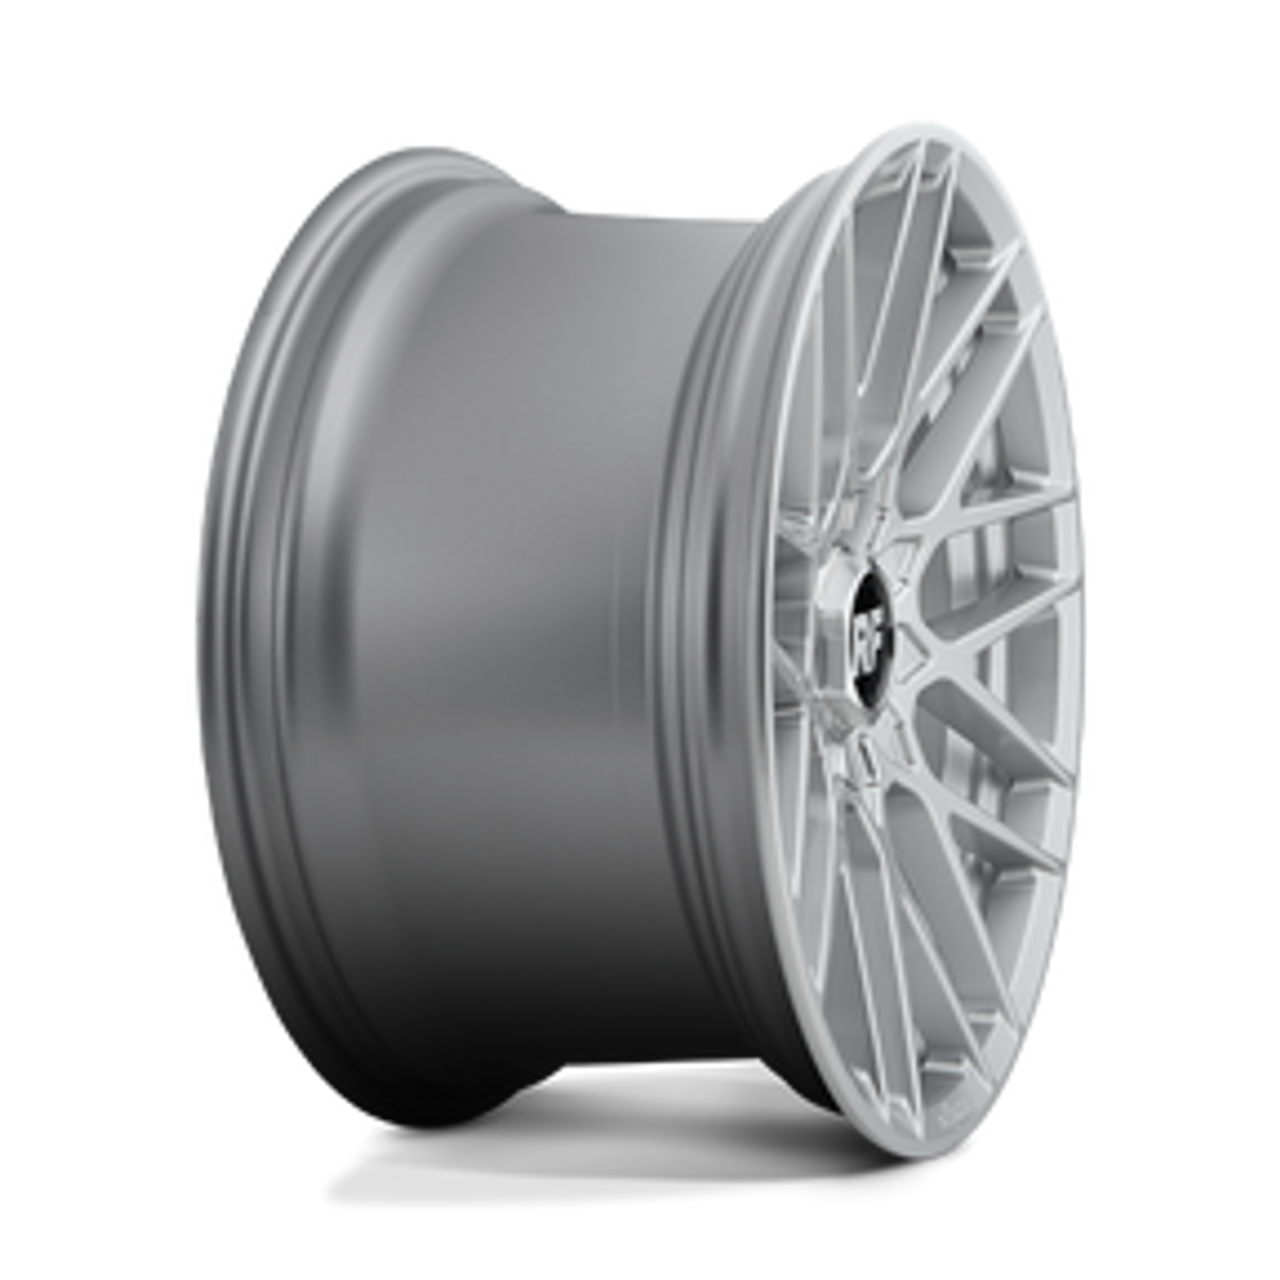 Rotiform R140 RSE Wheel 19x8.5 5x100/5x112 45 Offset - Gloss Silver